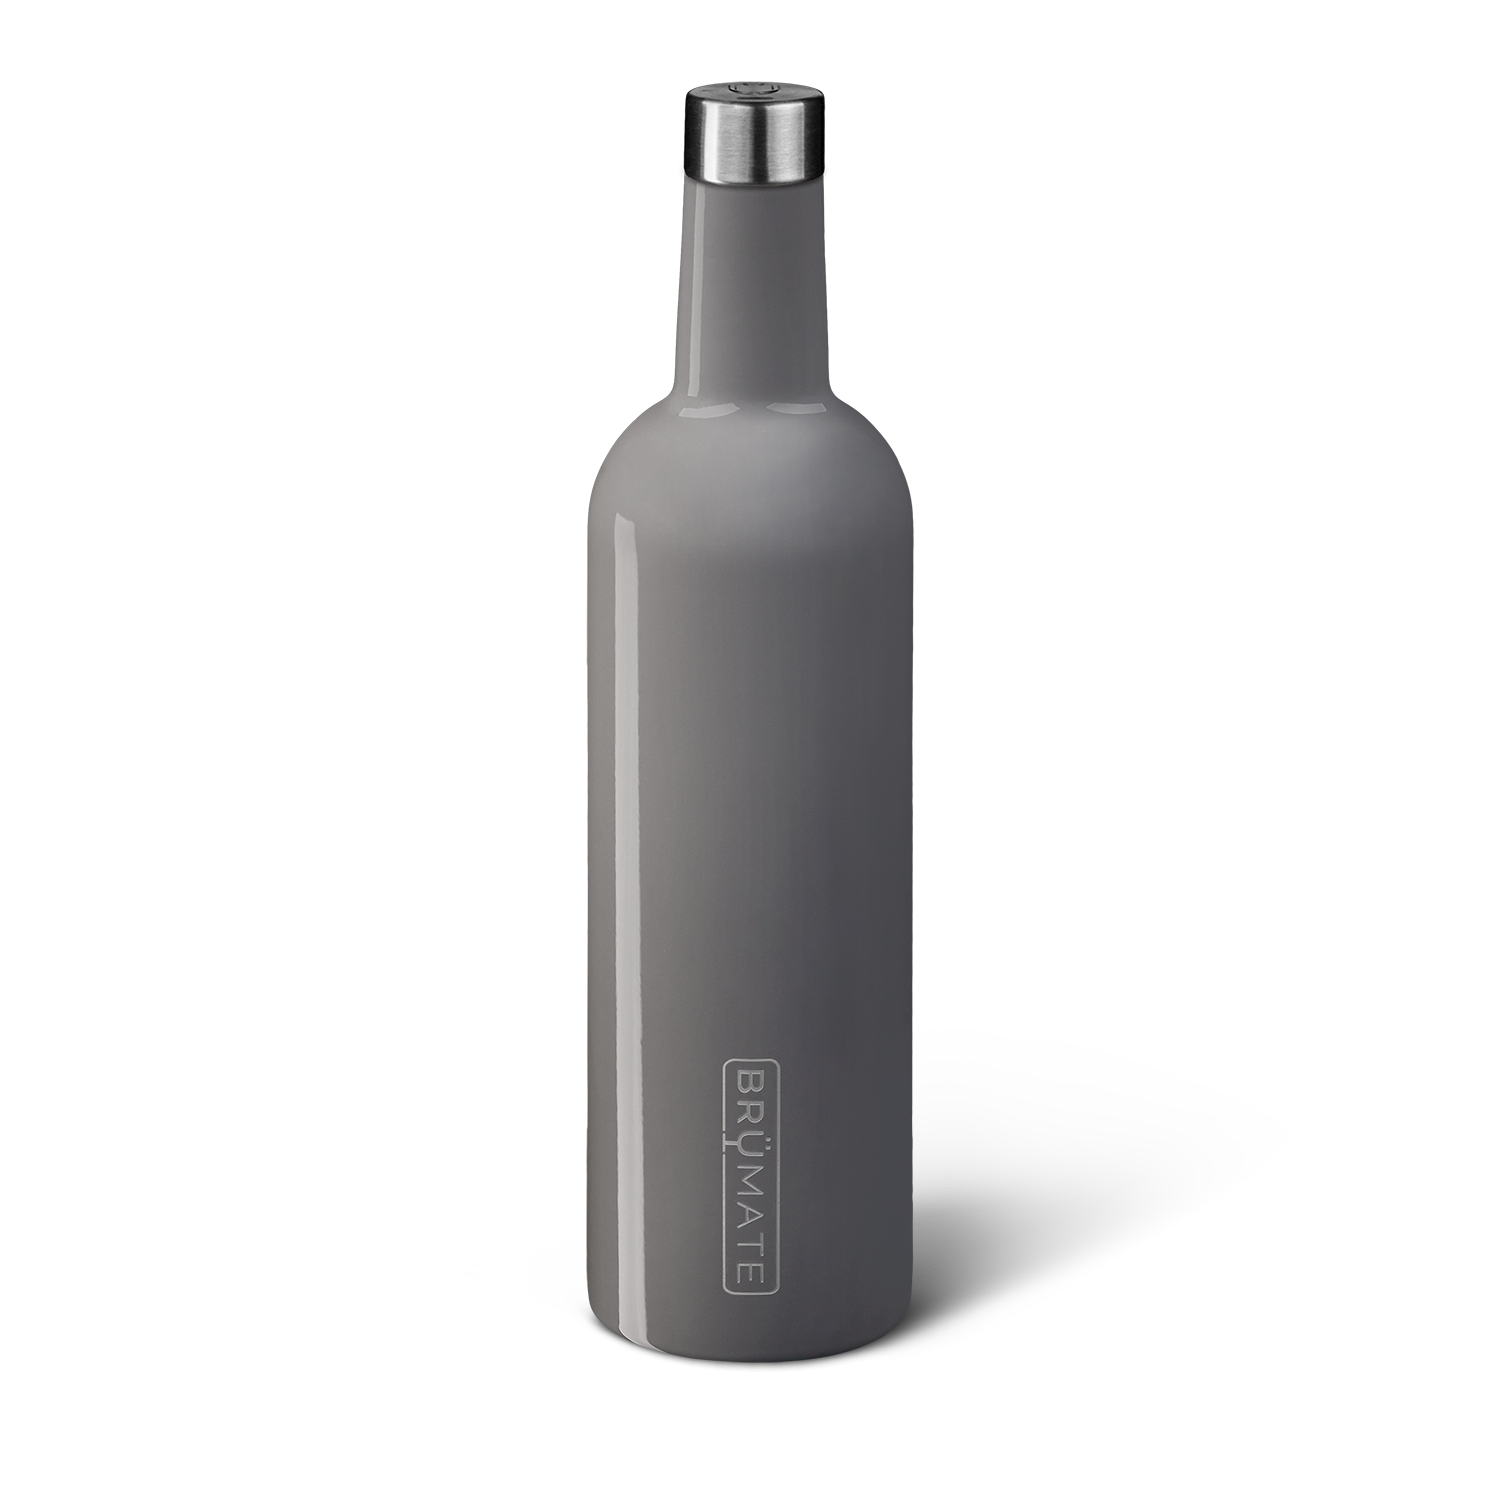 BruMate Insulated Stainless Steel Wine Glass 14oz/750ml Bottle